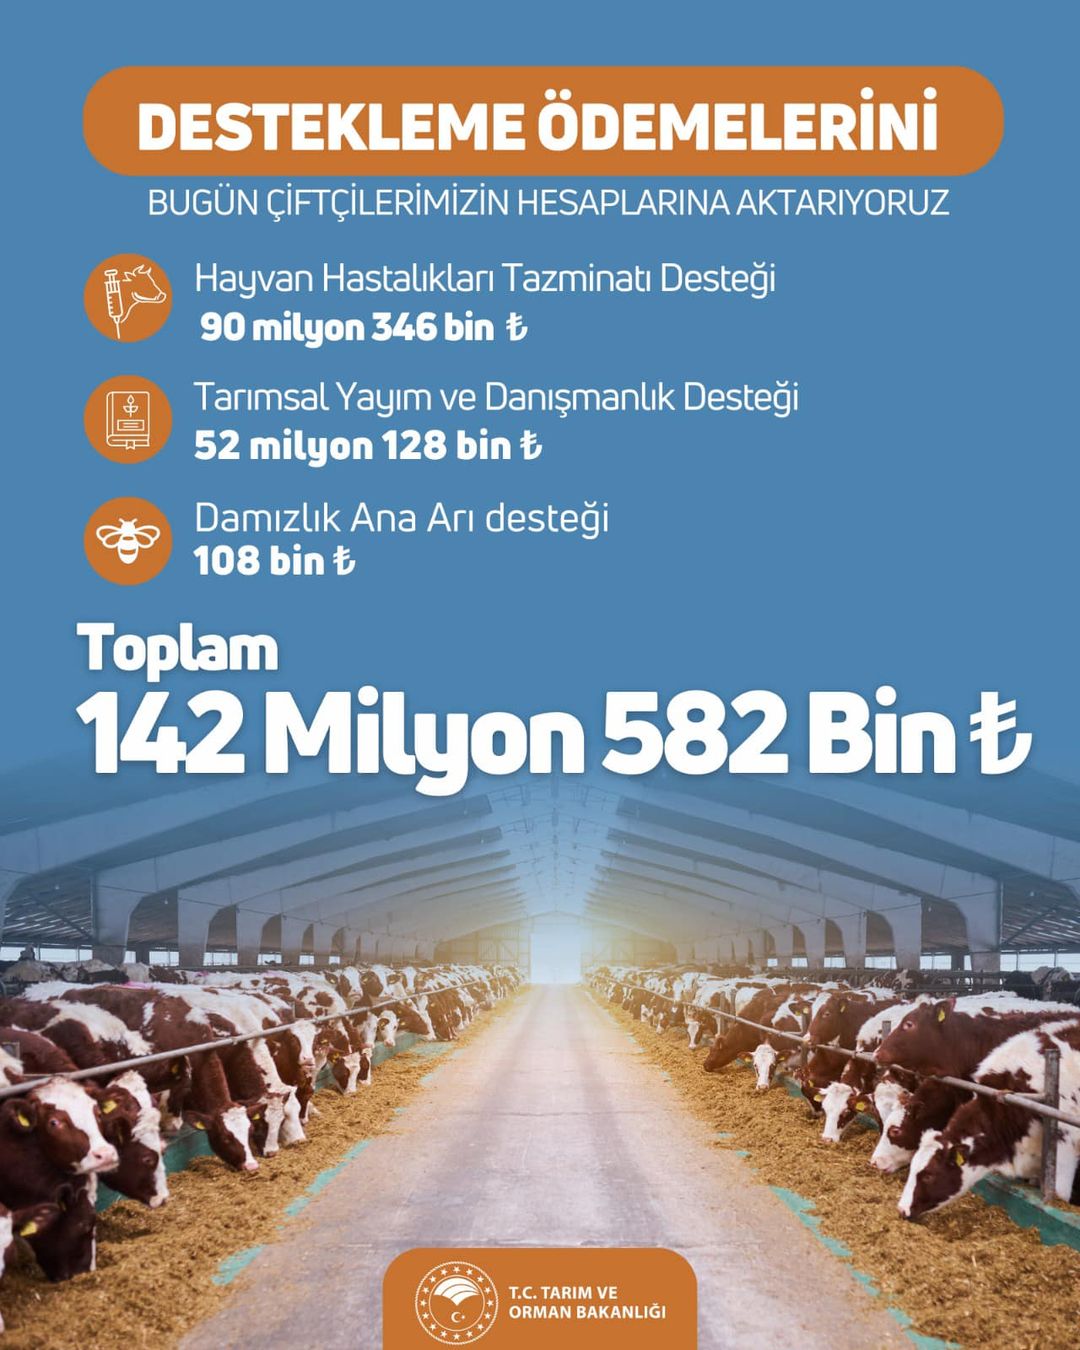 Malatya'da Çiftçilere 142 Milyon TL'lik Destek Paketi